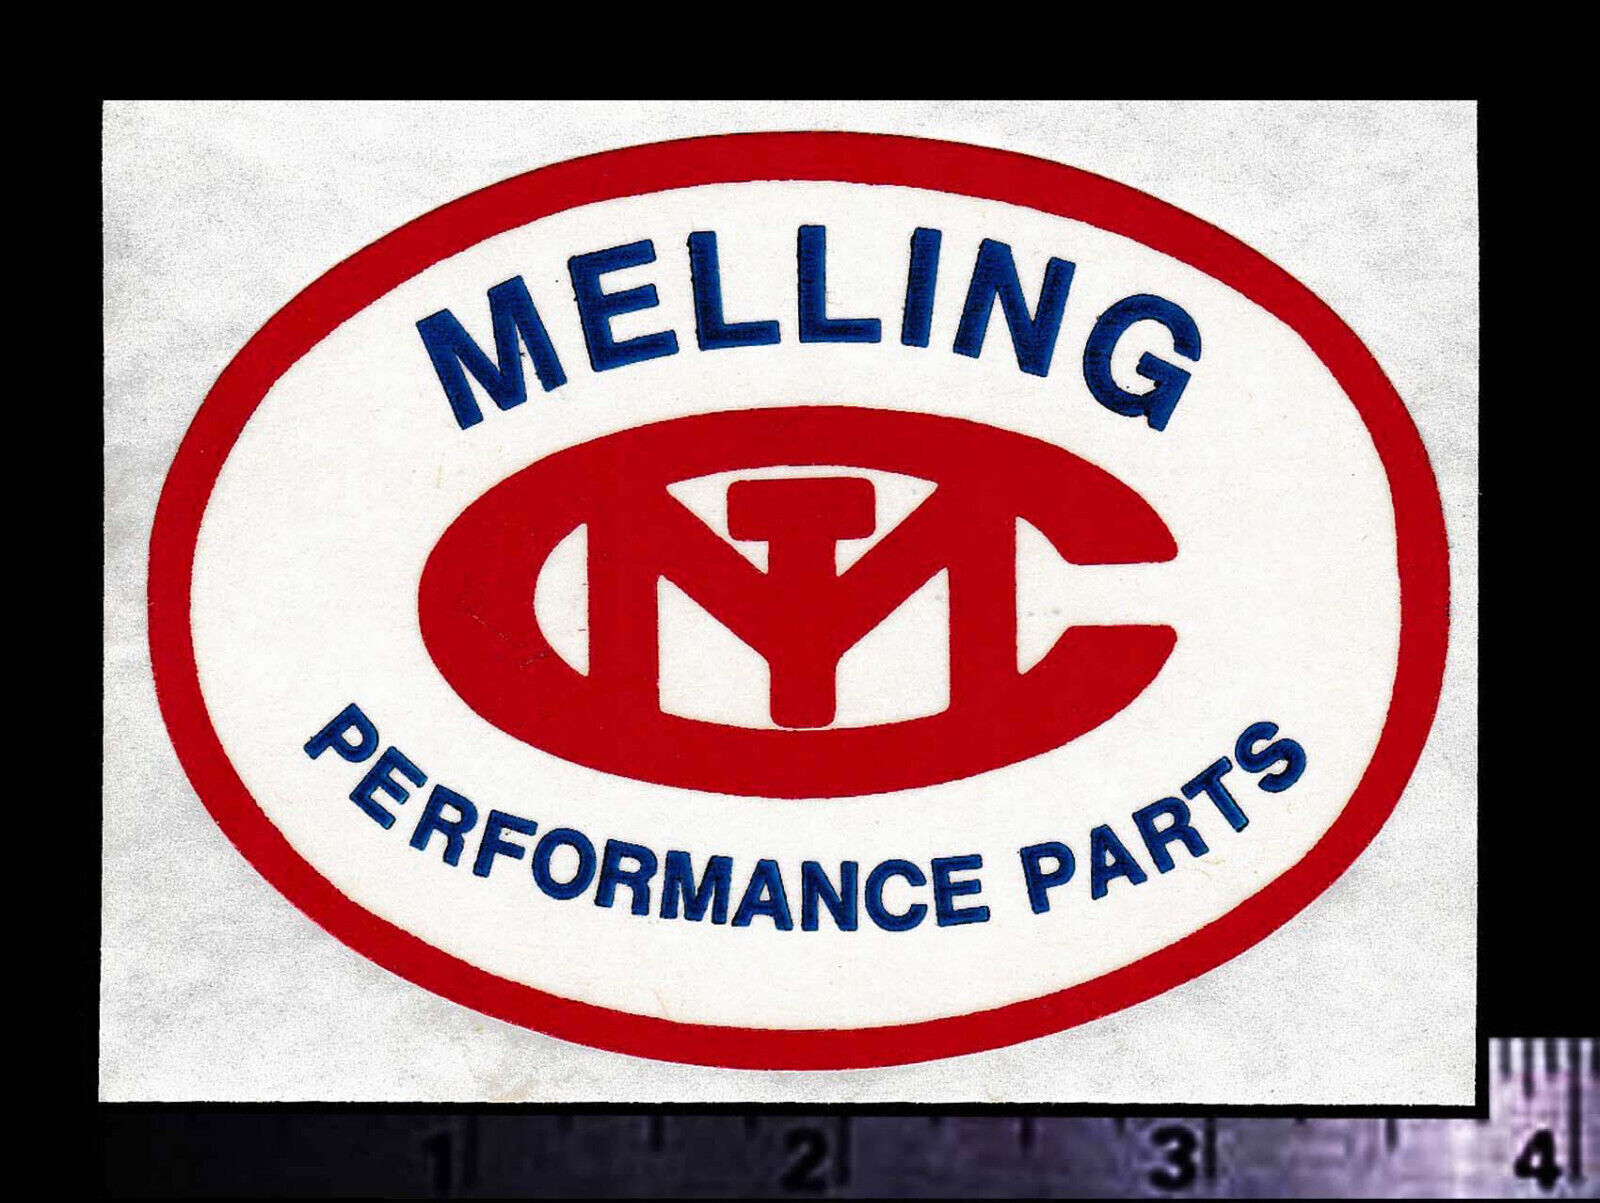 MELLING Performance Parts - Original Vintage 1970\'s Racing Decal/Sticker